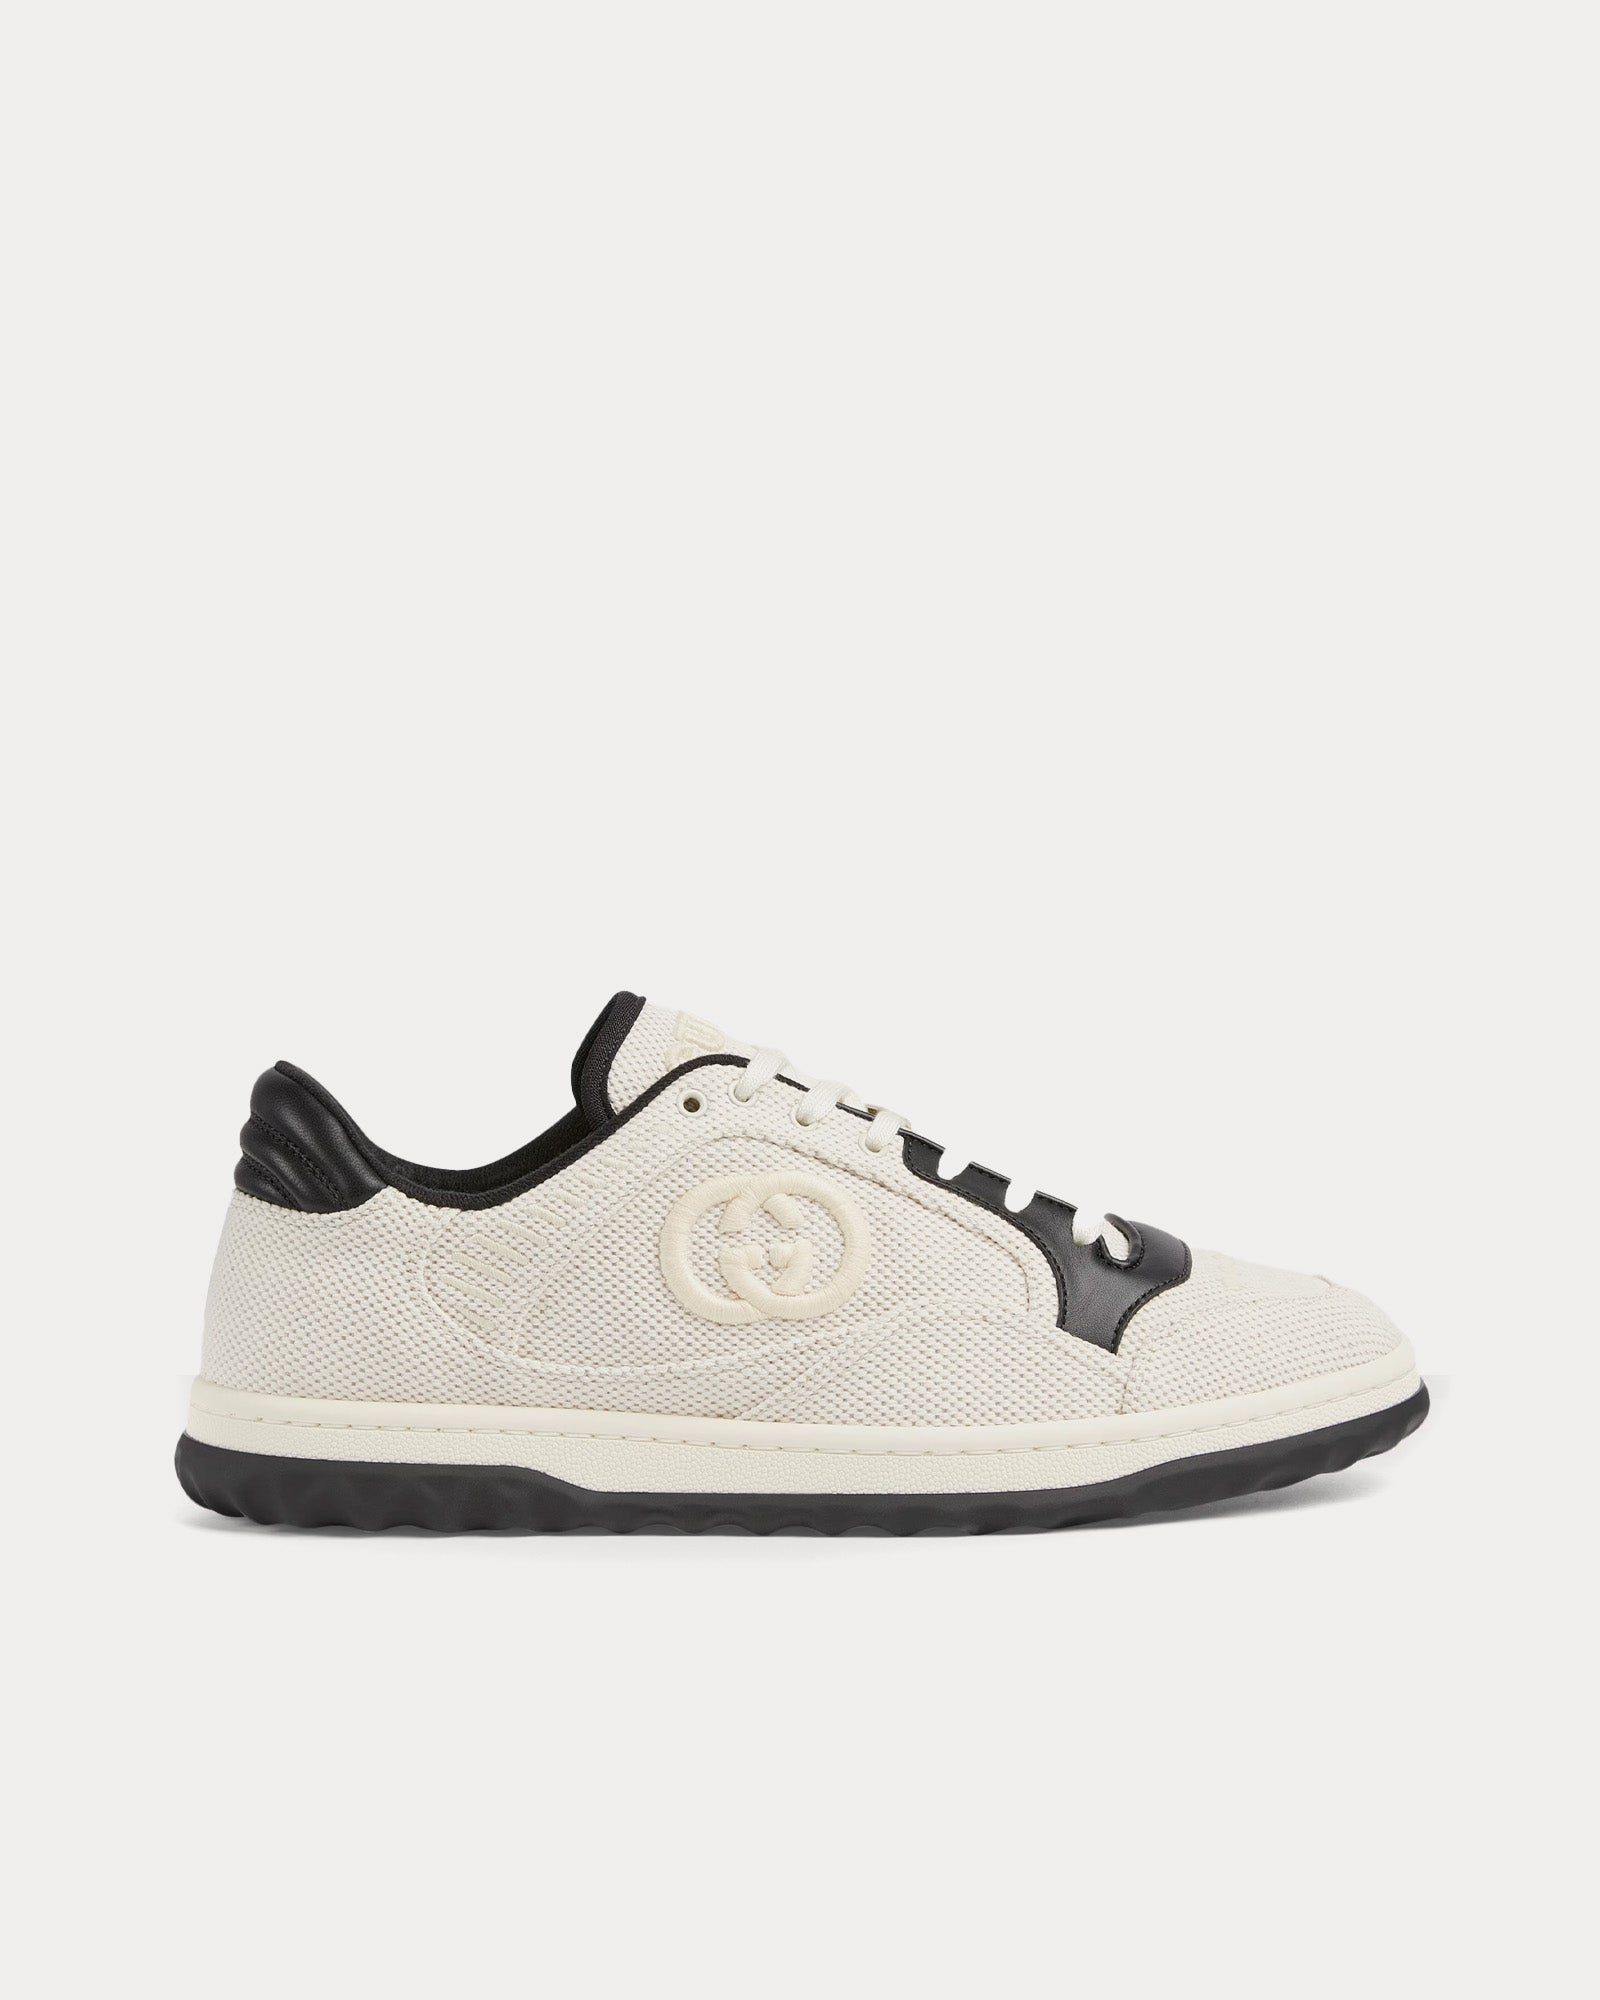 Gucci - MAC80 Canvas Beige / Black Low Top Sneakers